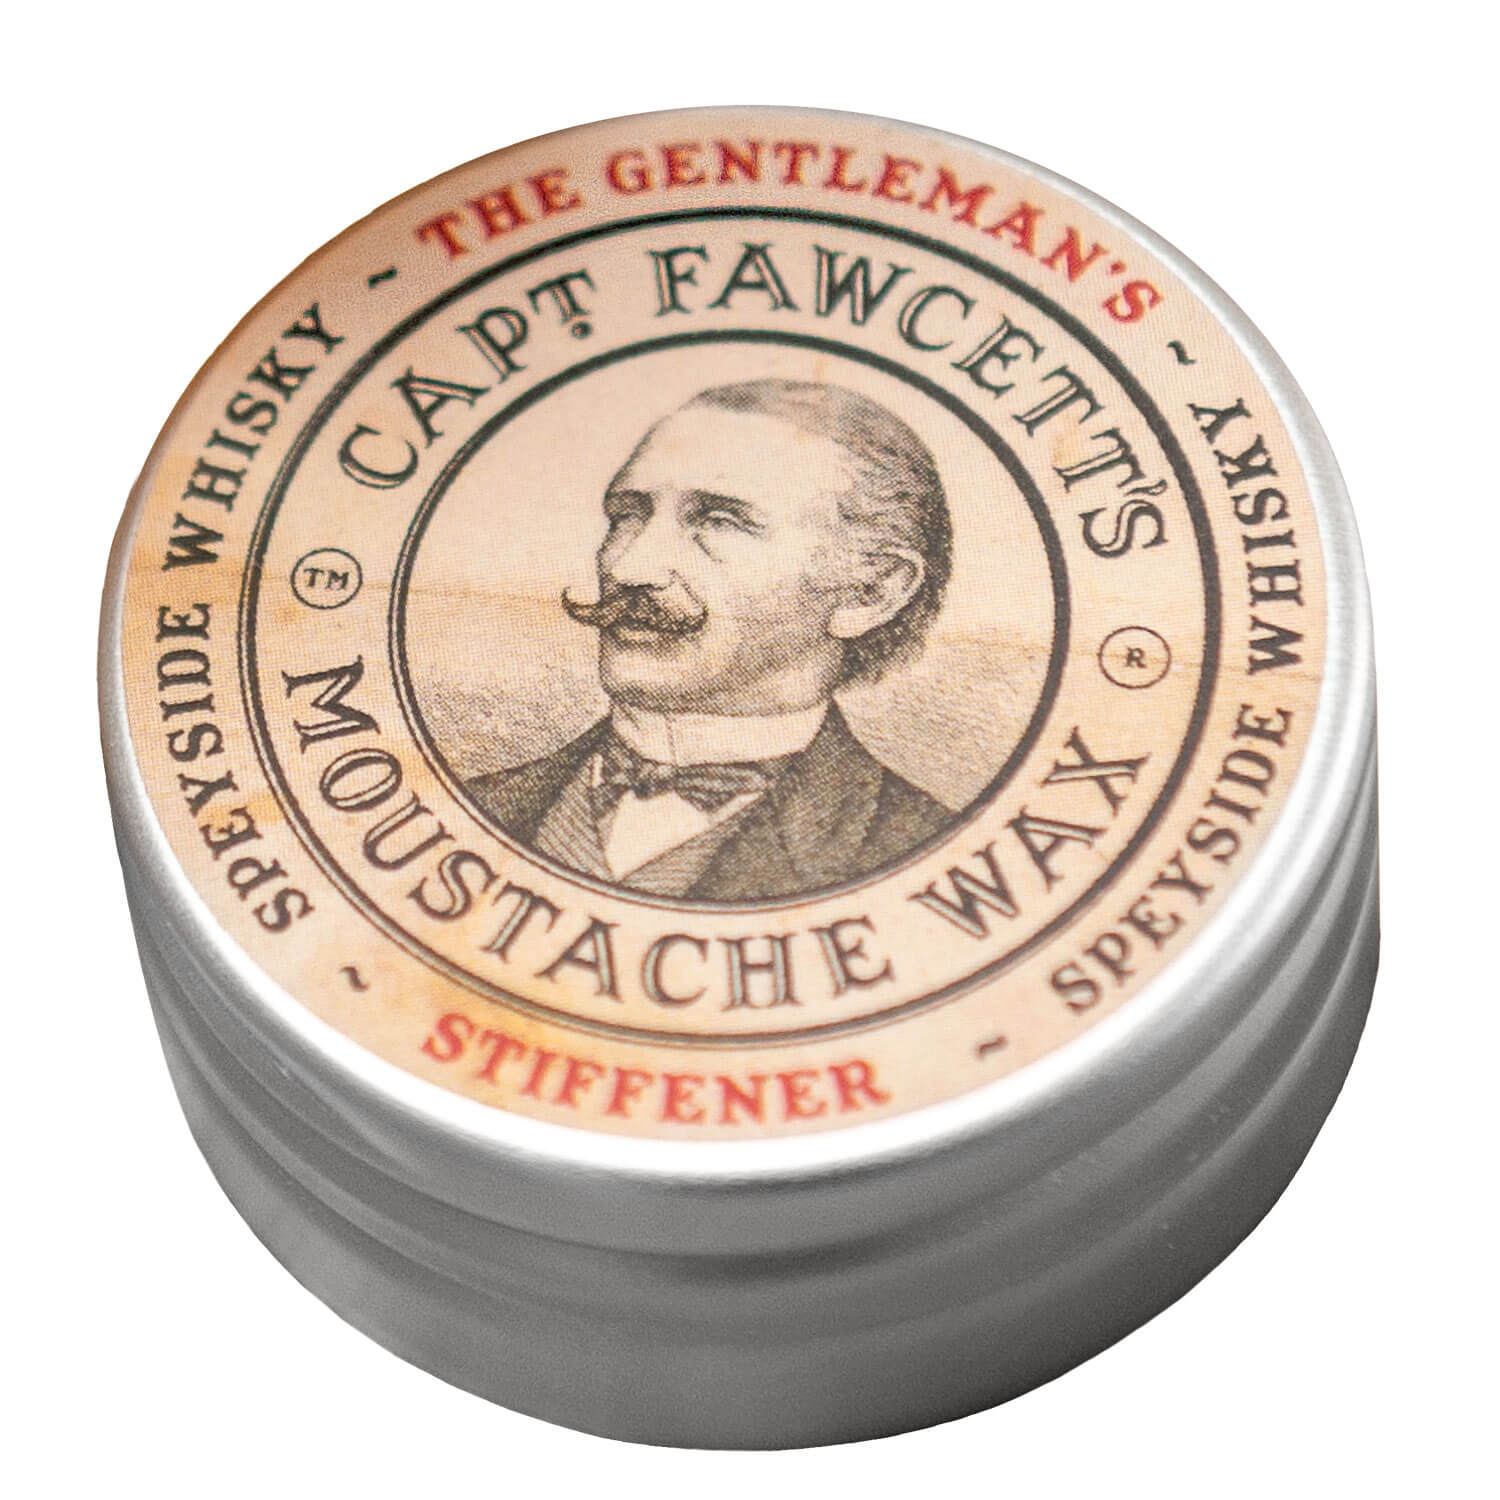 Product image from Capt. Fawcett Care - Gentleman's Stiffener Malt Whisky Moustache Wax